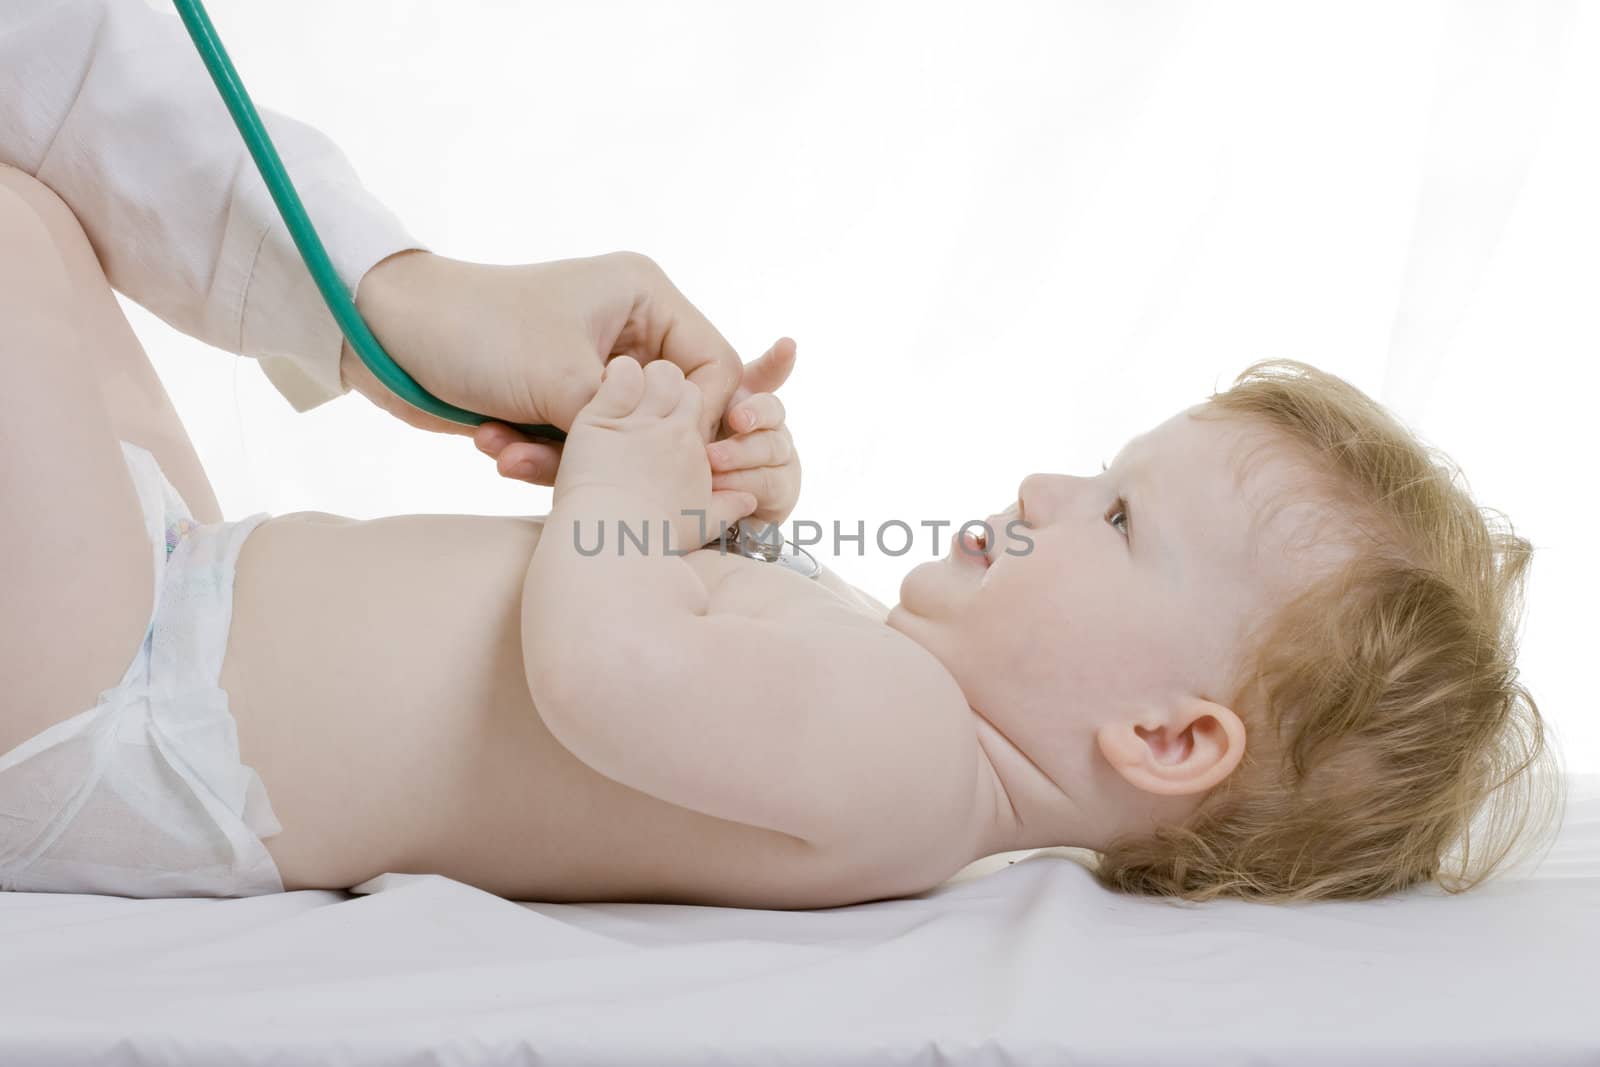 Child medical examination by Nobilior